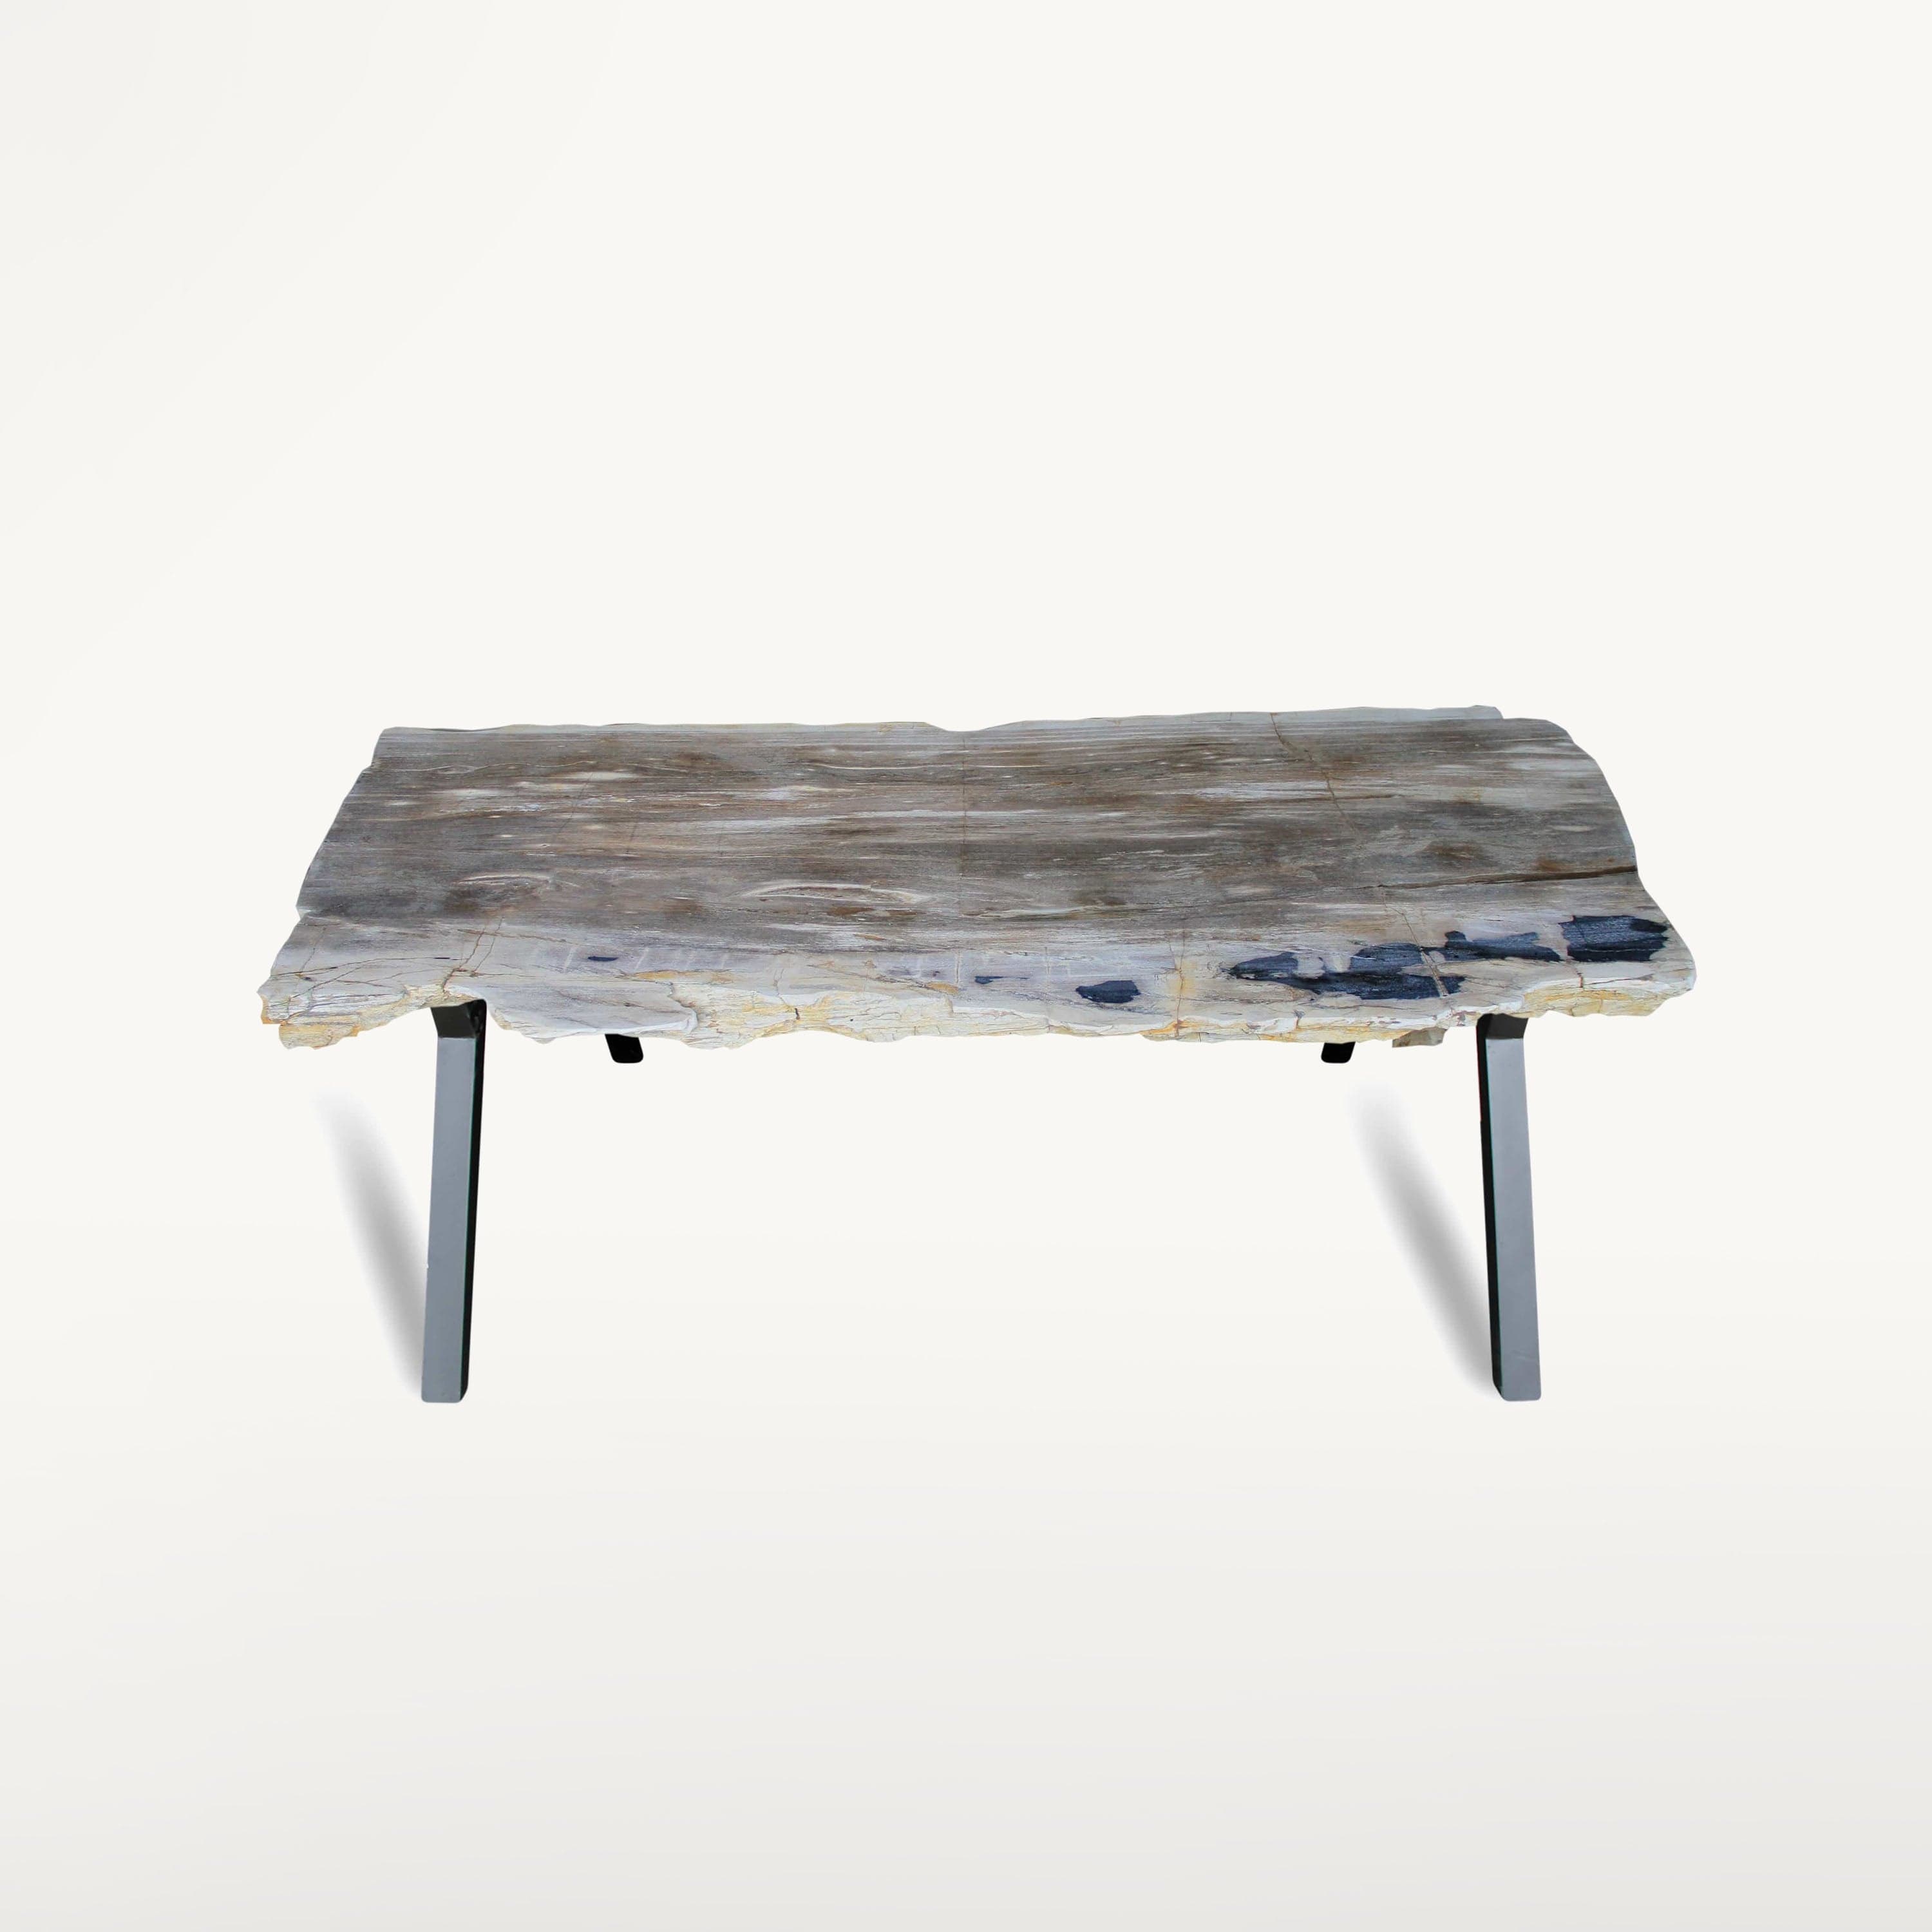 Kalifano Petrified Wood Polished Petrified Wood Table from Indonesia - 80" / 408 lbs PWR14800.001